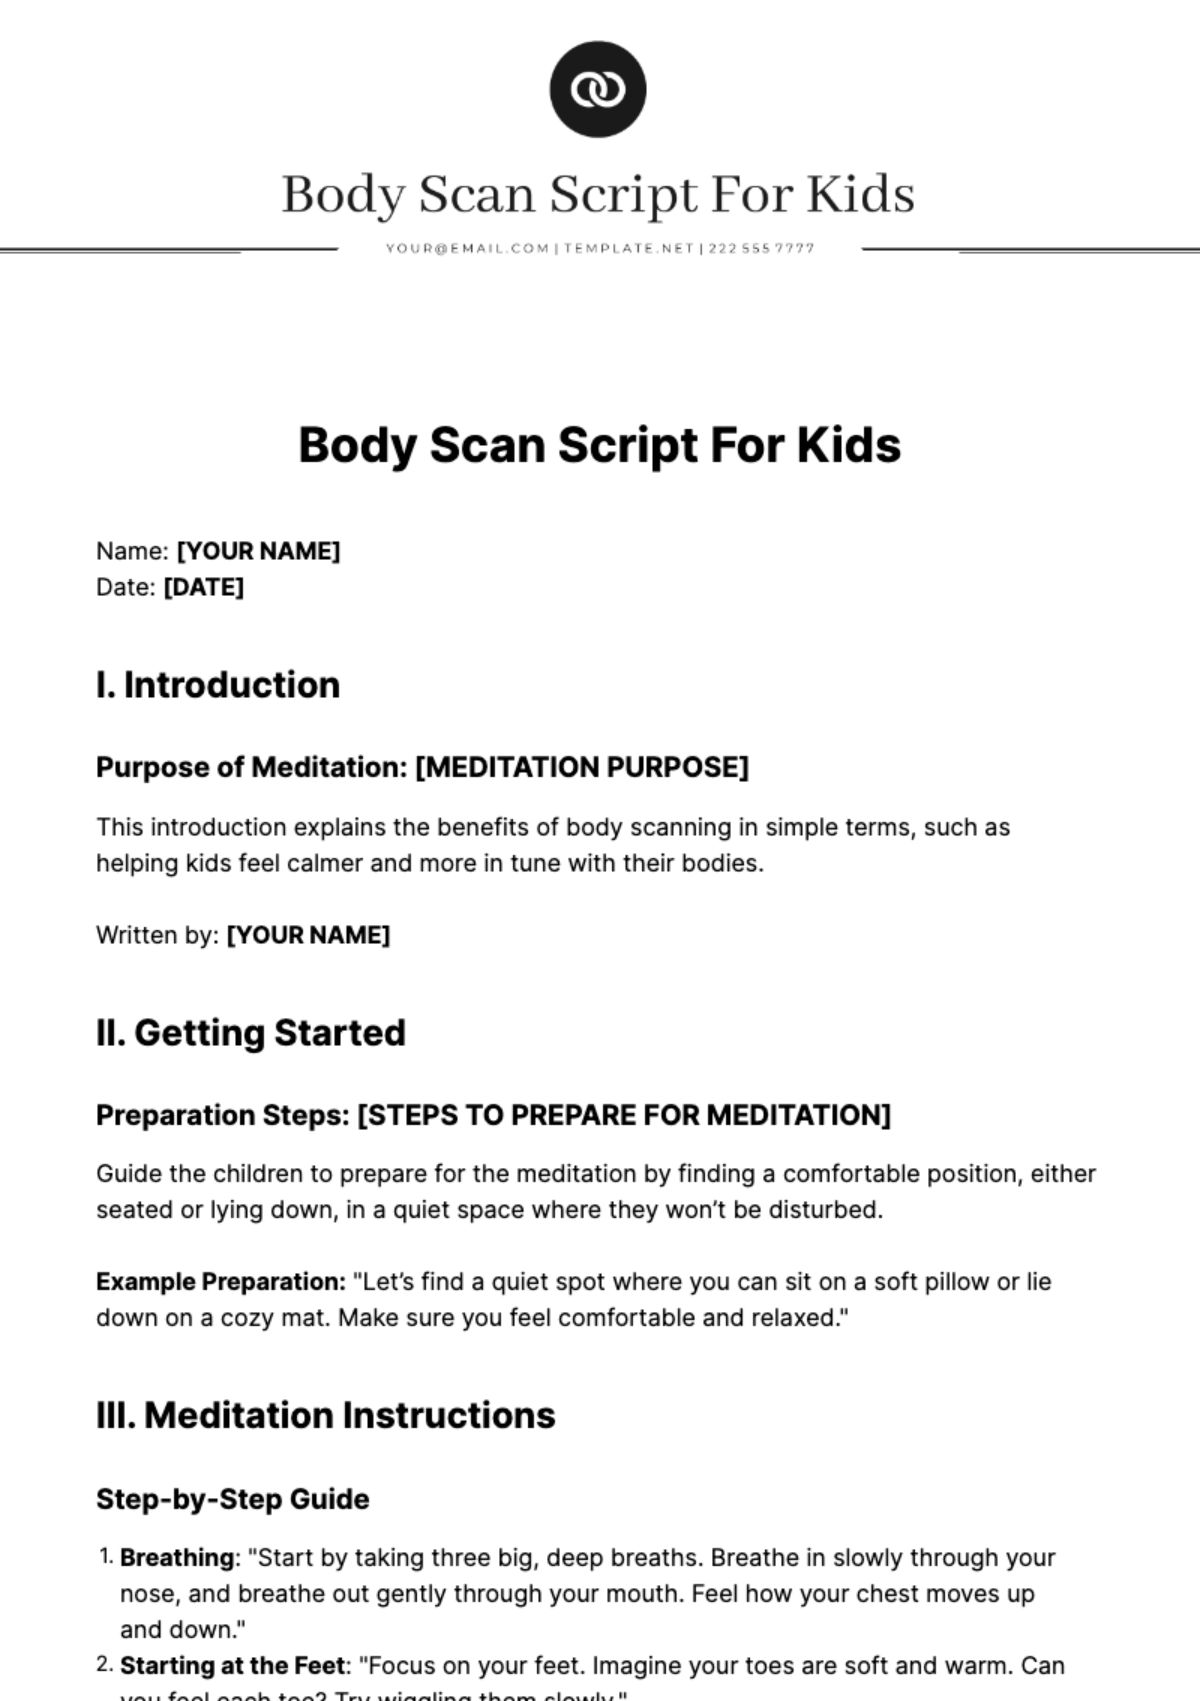 Body Scan Script For Kids Template